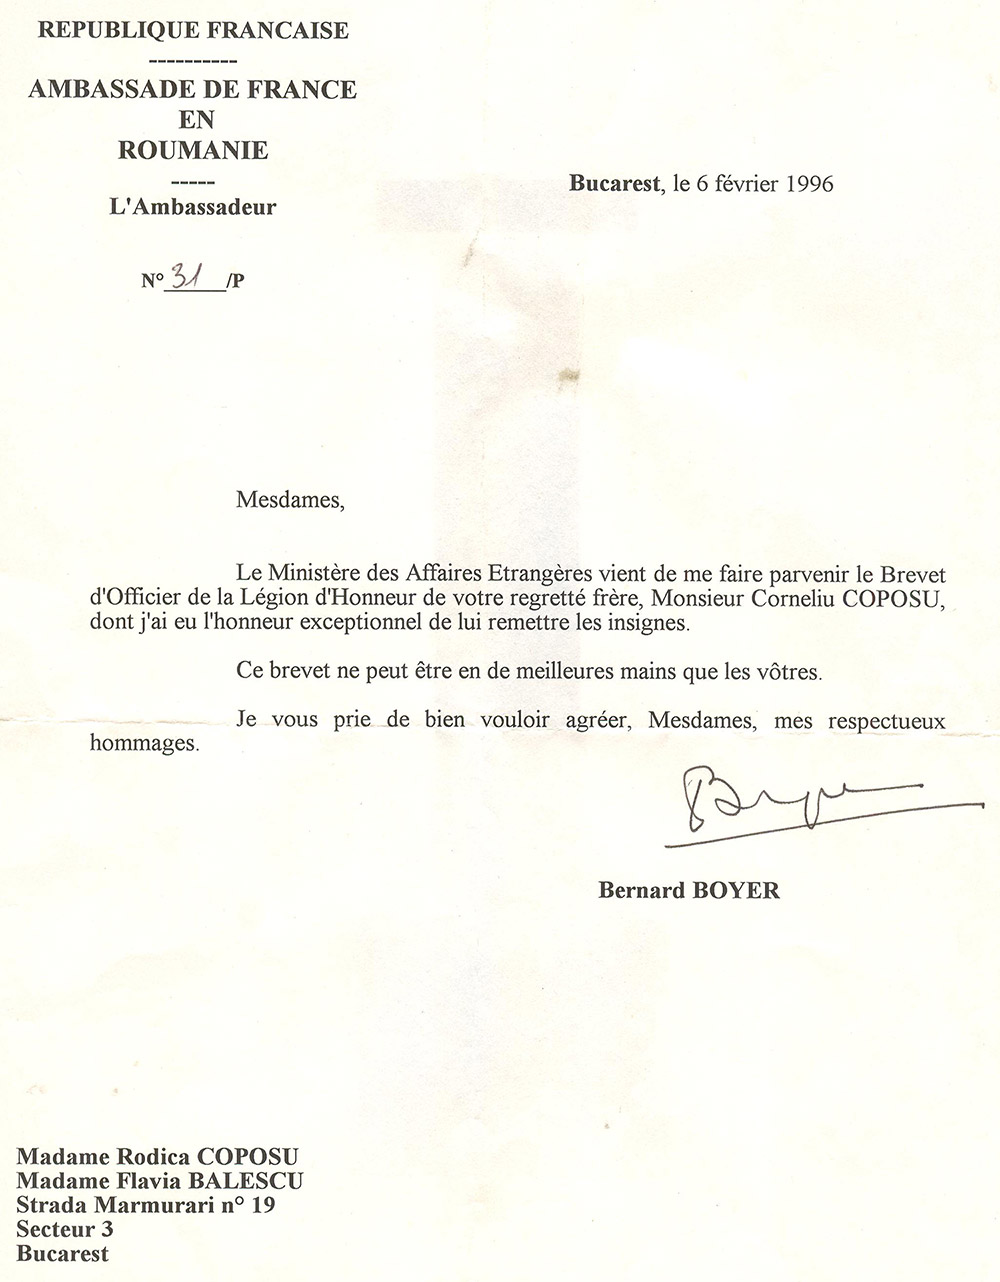 Bernard Boyer, Ambasade de France en Roumanie - Madame Rodica Coposu, Madame Flavia Balescu - 6 fevrier 1996